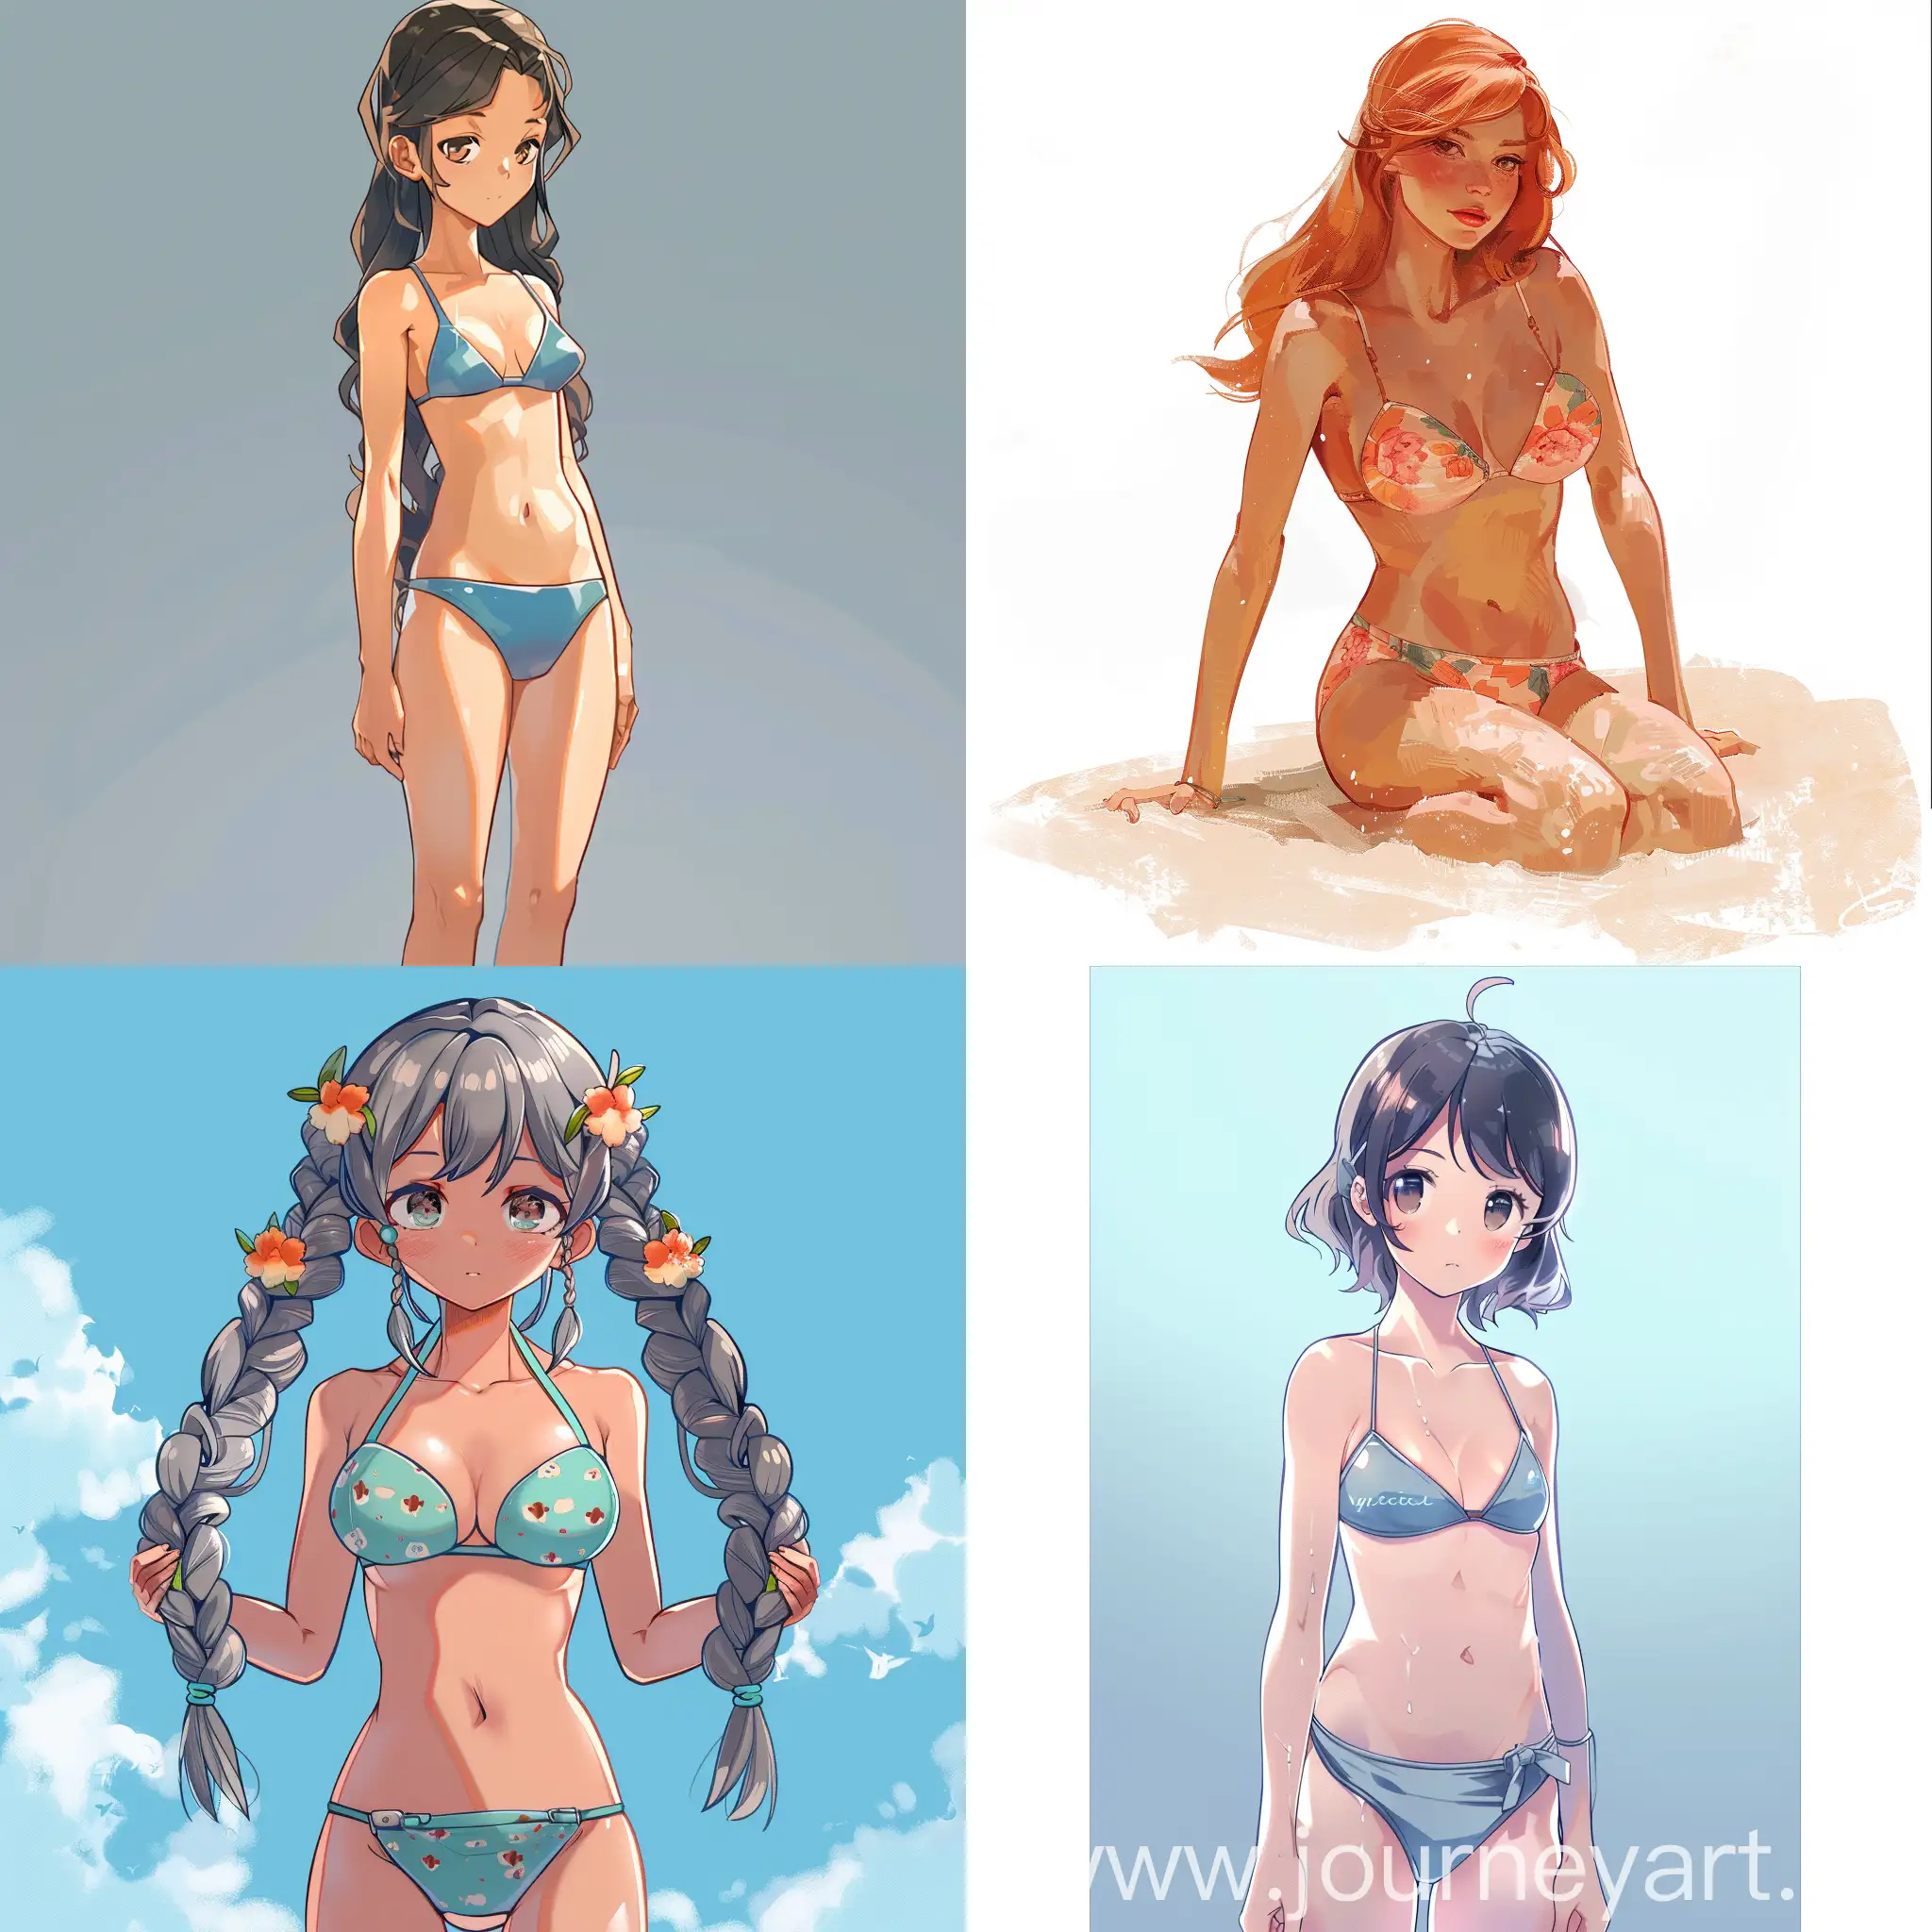 Young-Girl-Enjoying-Summer-Fun-in-Swimsuit